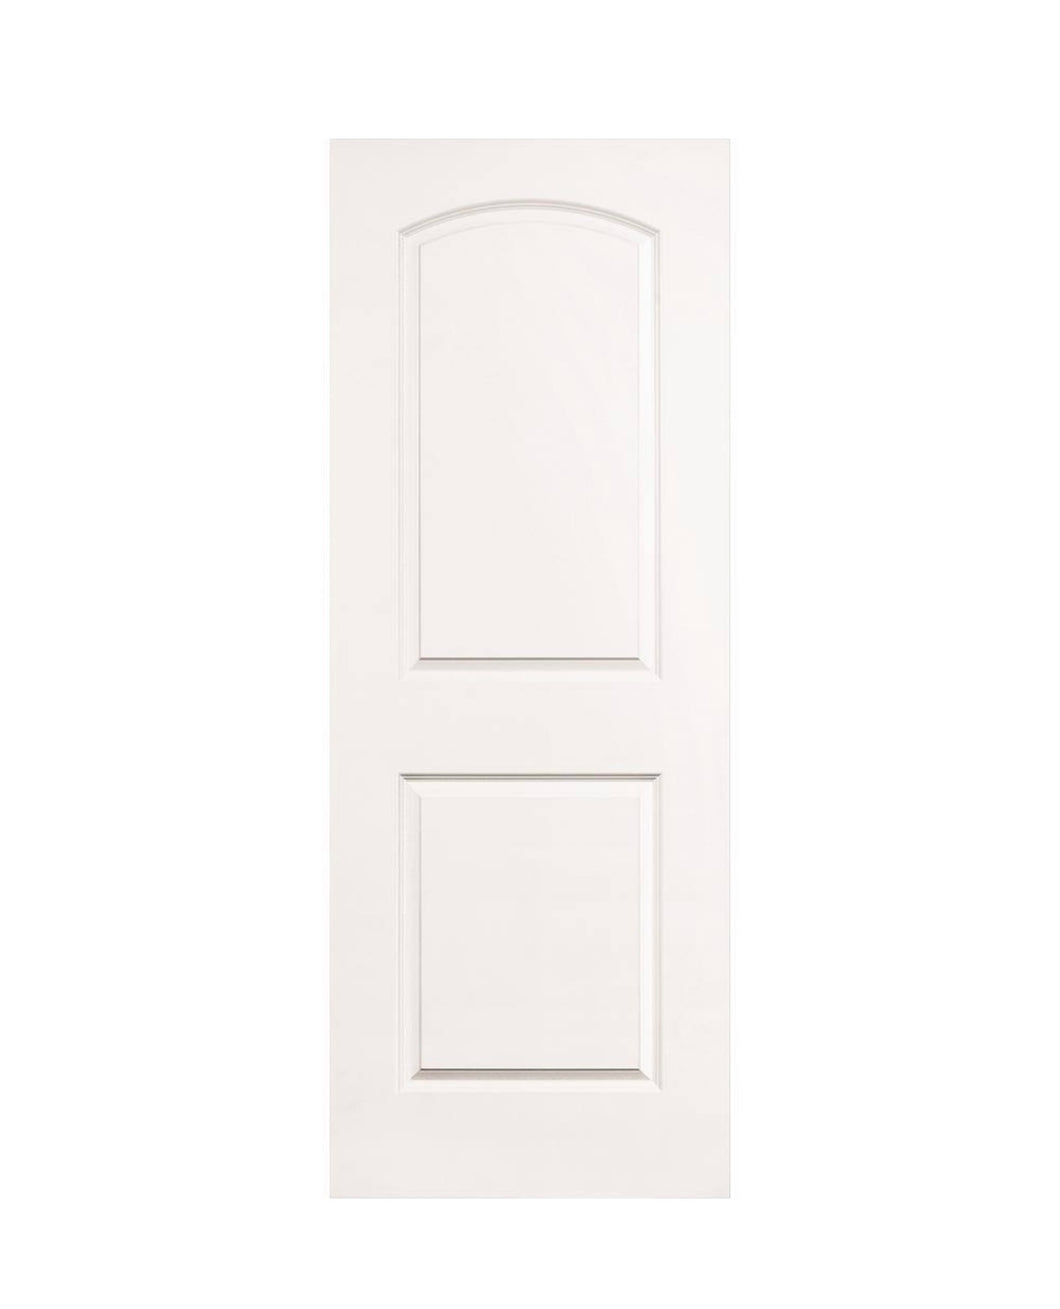 28 in. x 80 in. 2 Panel Roundtop Hollow Core White Primed Wood Interior Door Slab